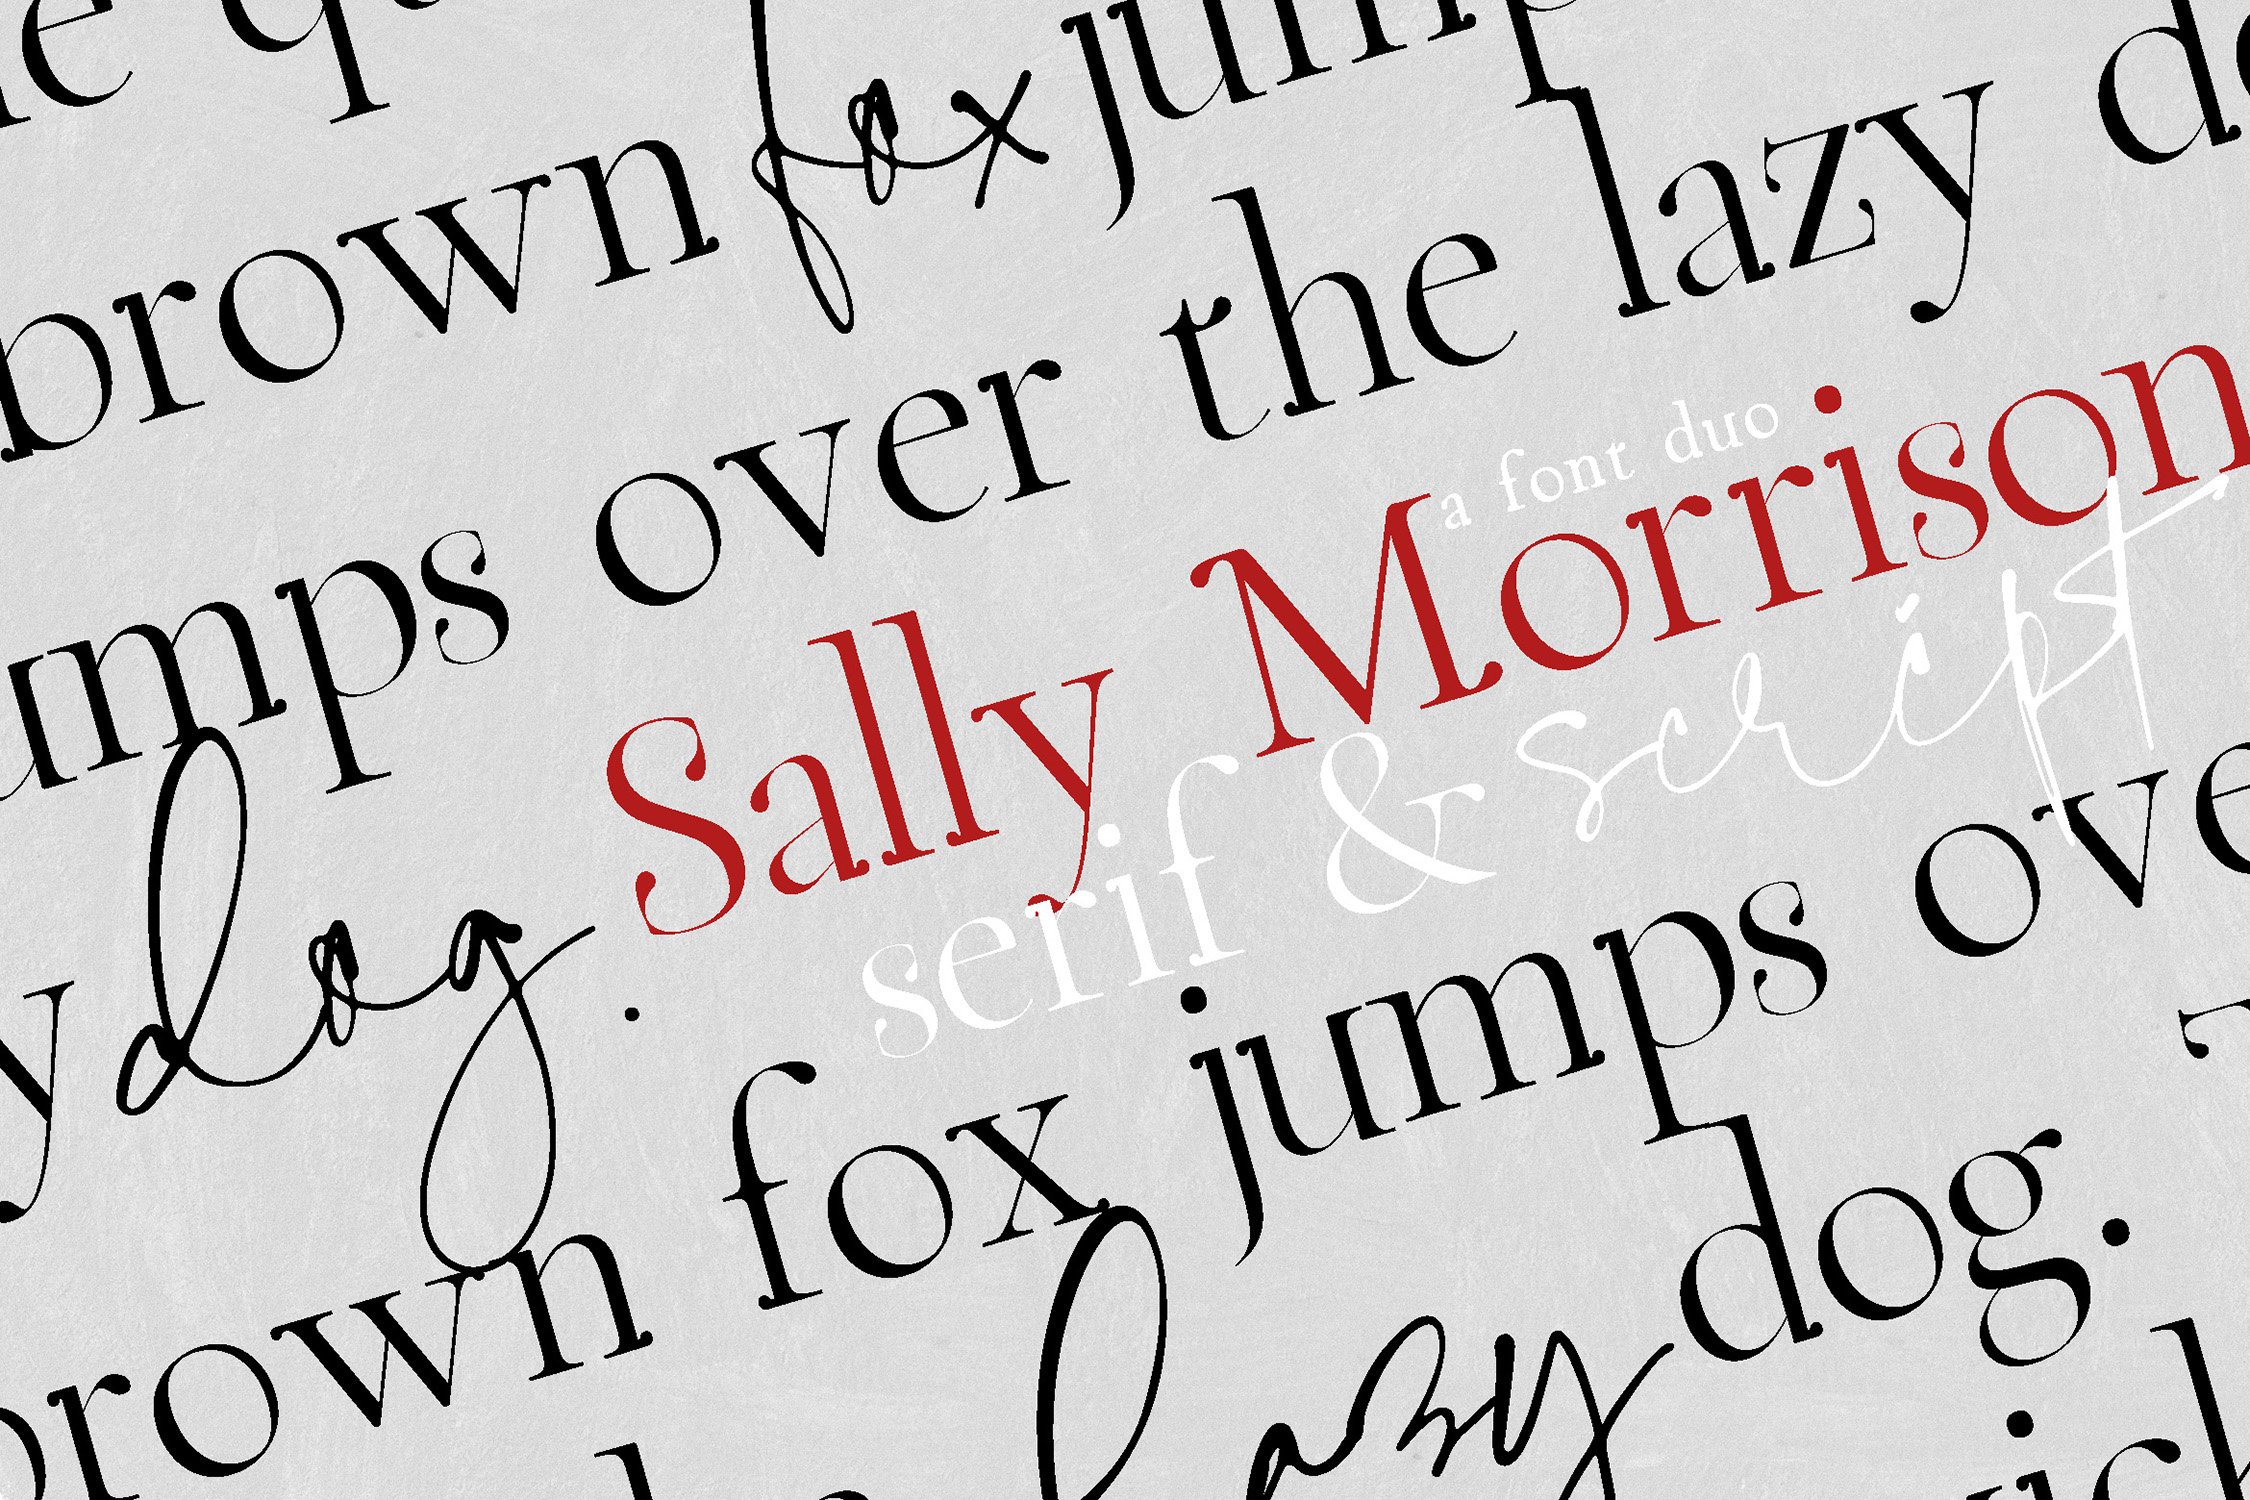 Sally Morrison